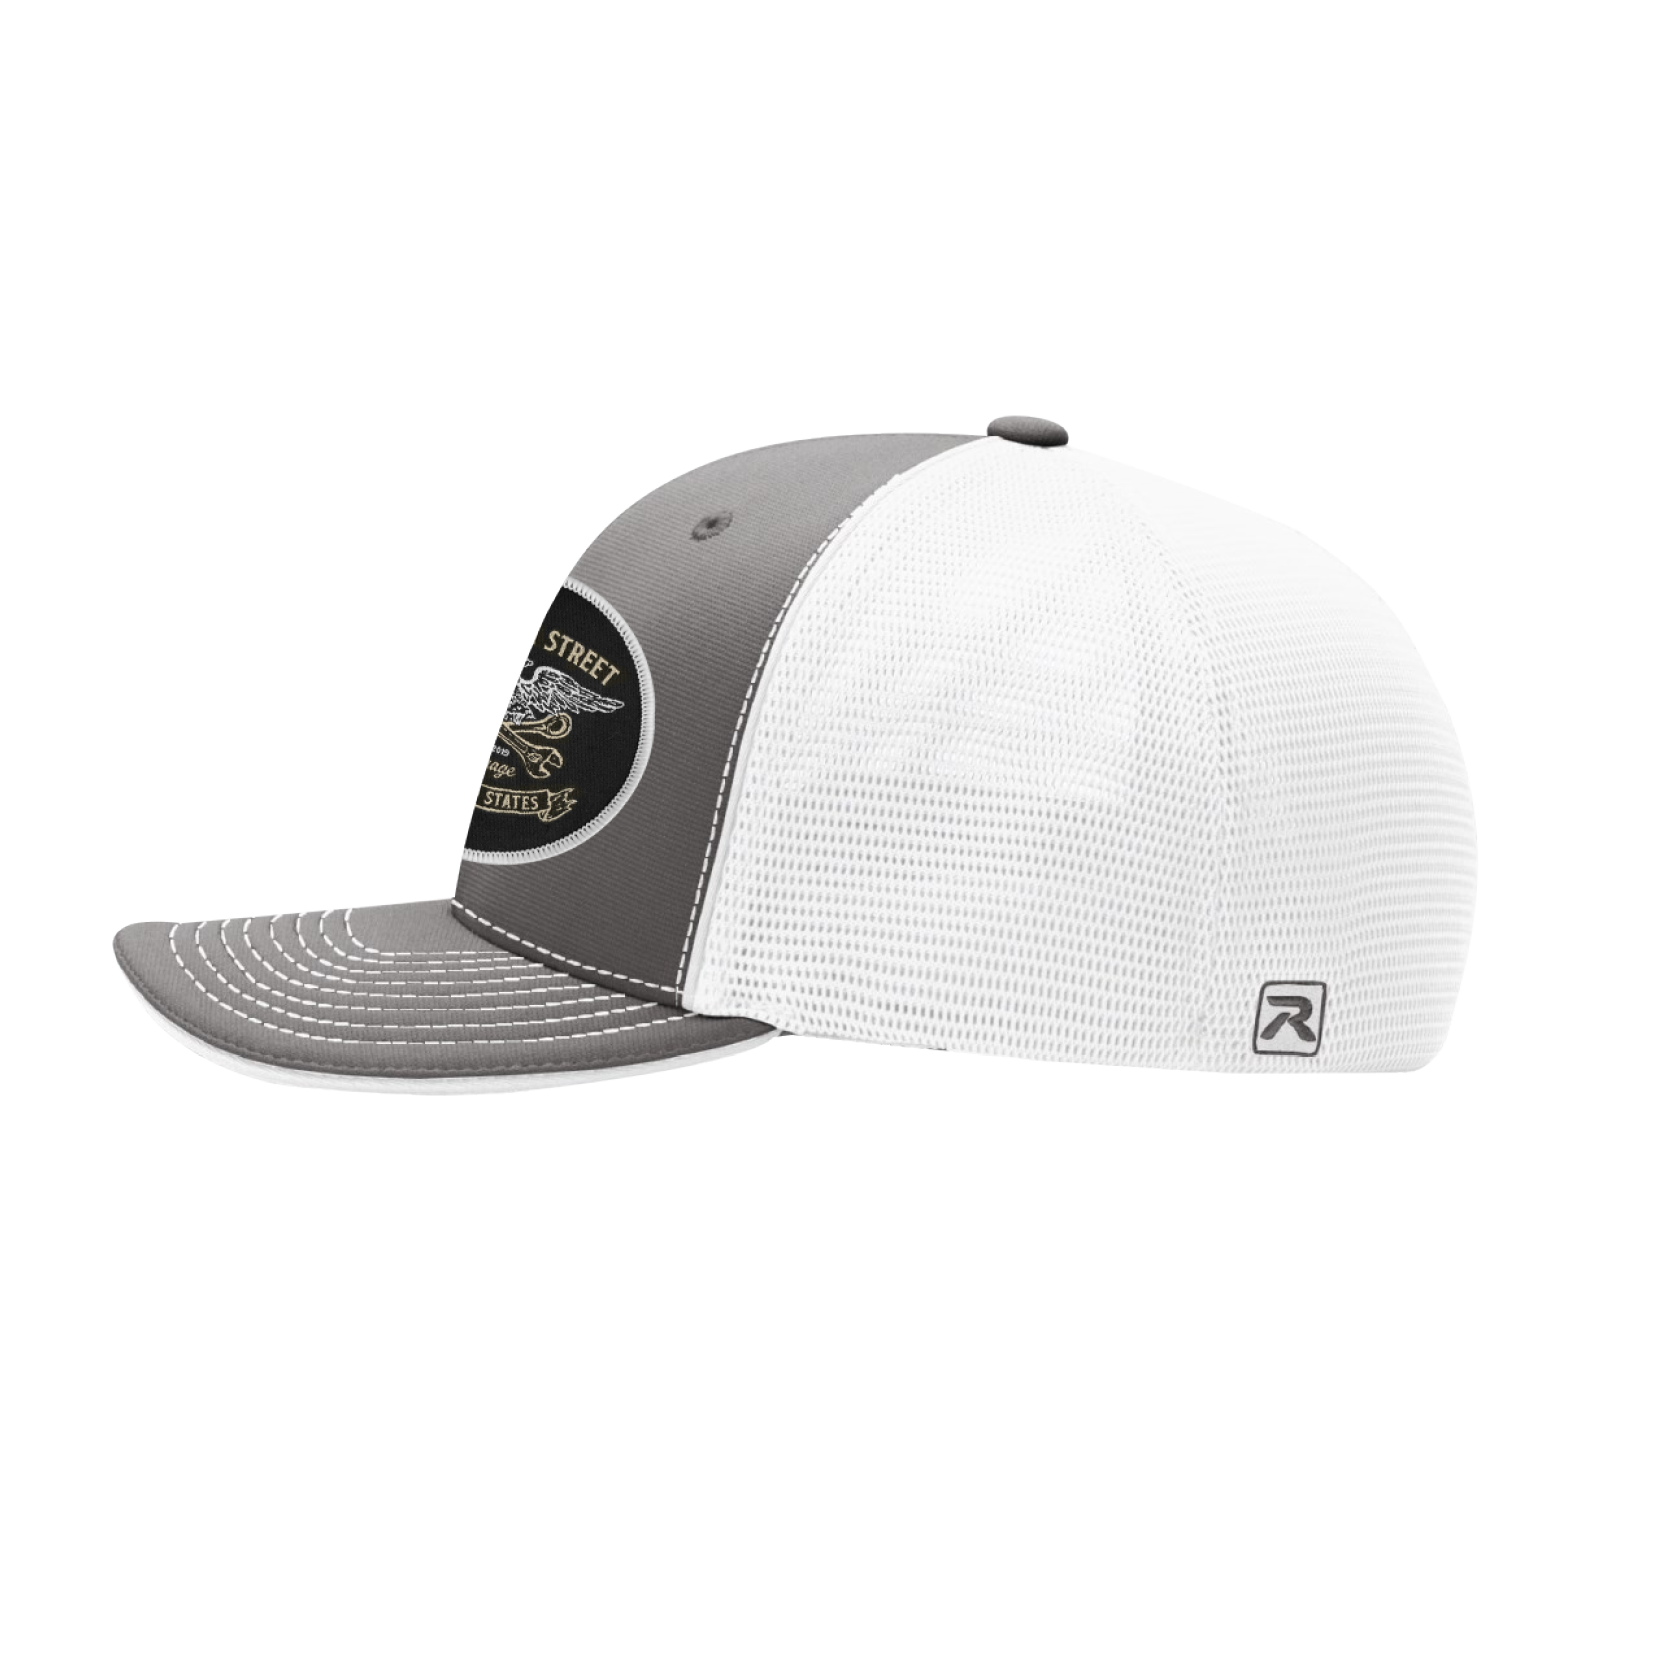 The Bald Eagle Grey/White Flexfit Hat